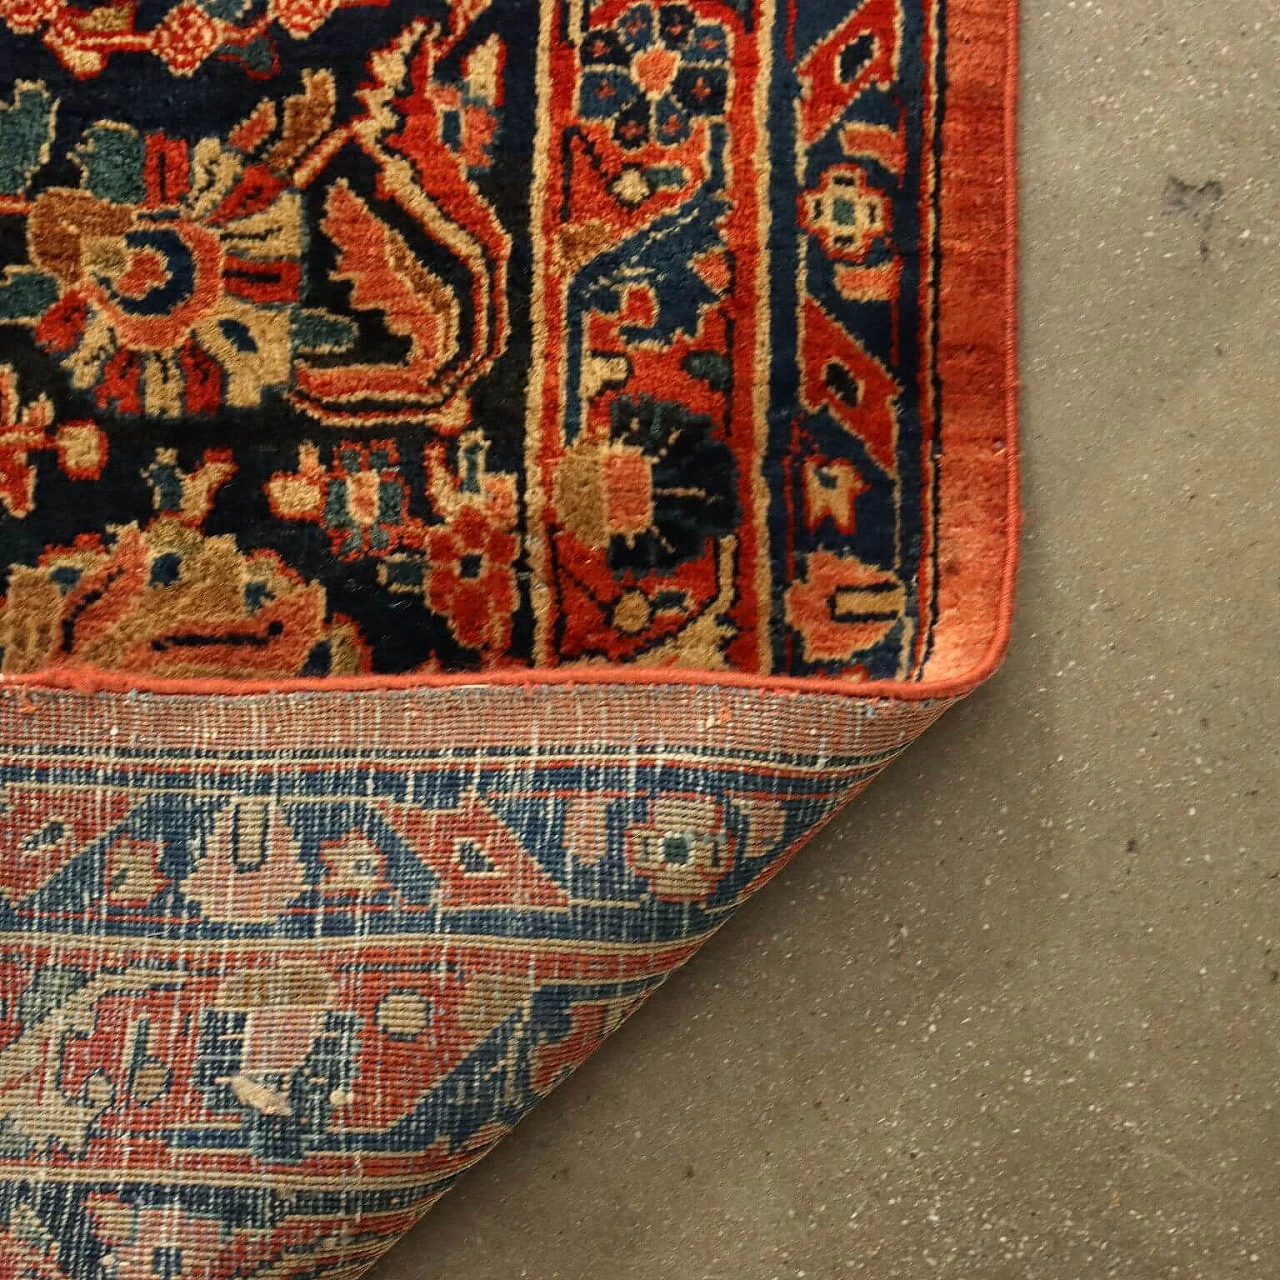 Iranian Saruk American cotton and wool carpet 9